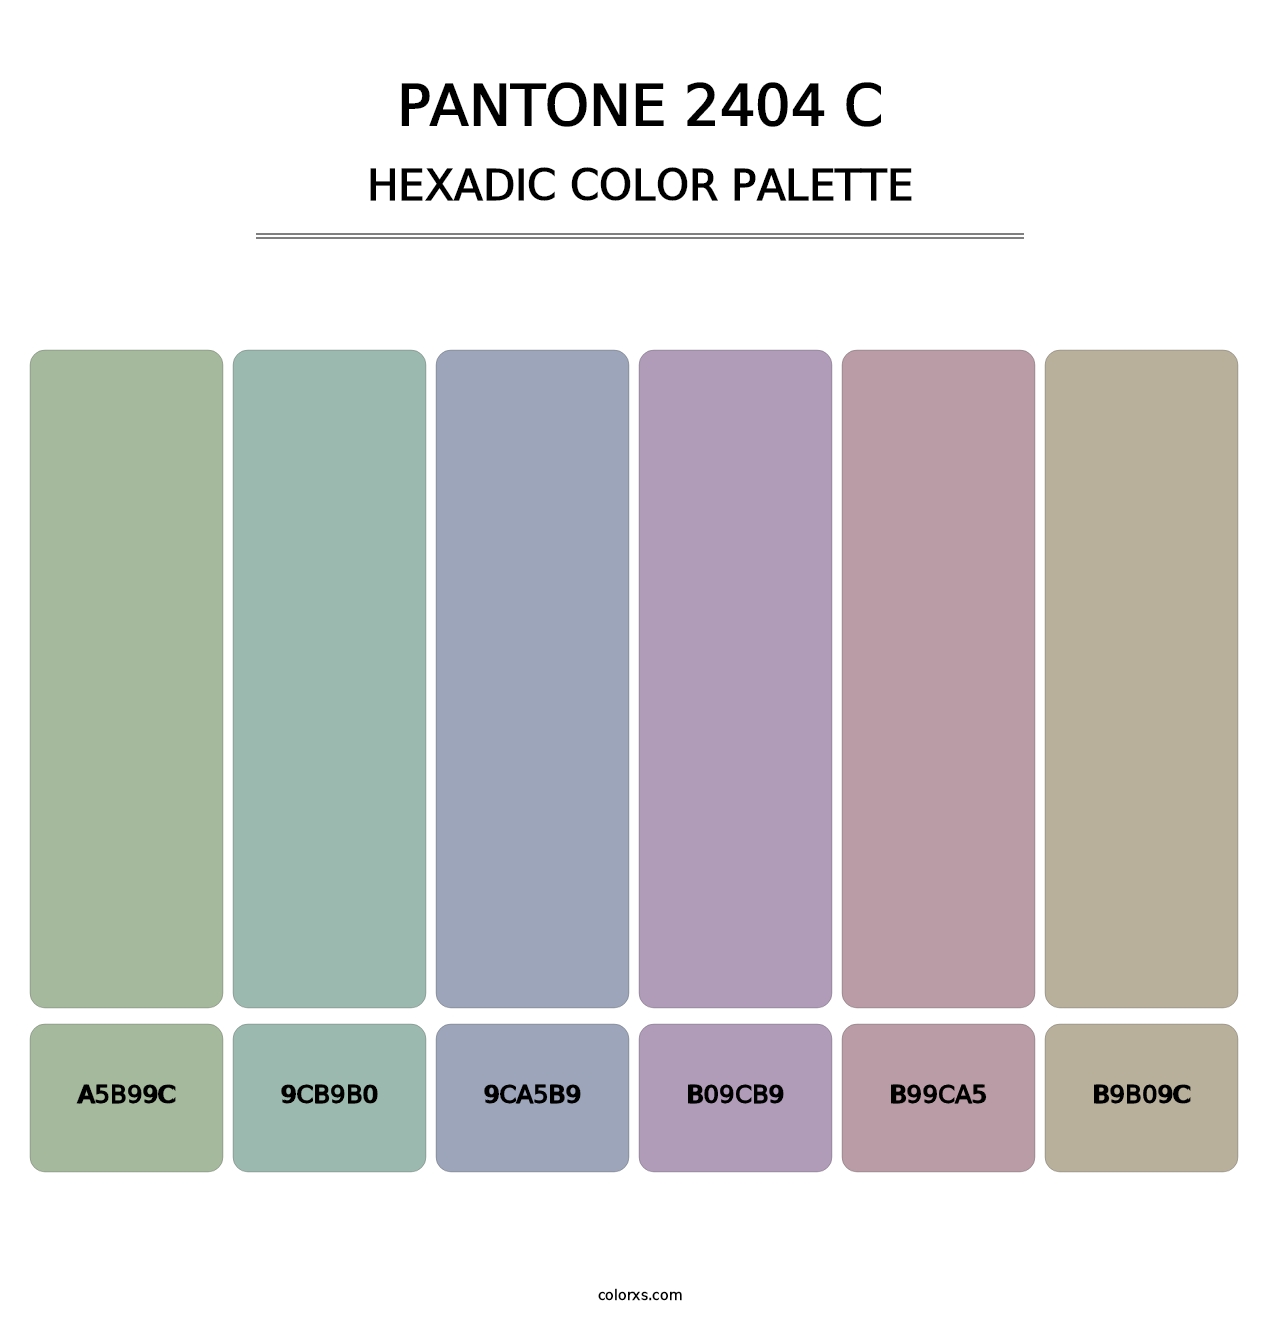 PANTONE 2404 C - Hexadic Color Palette